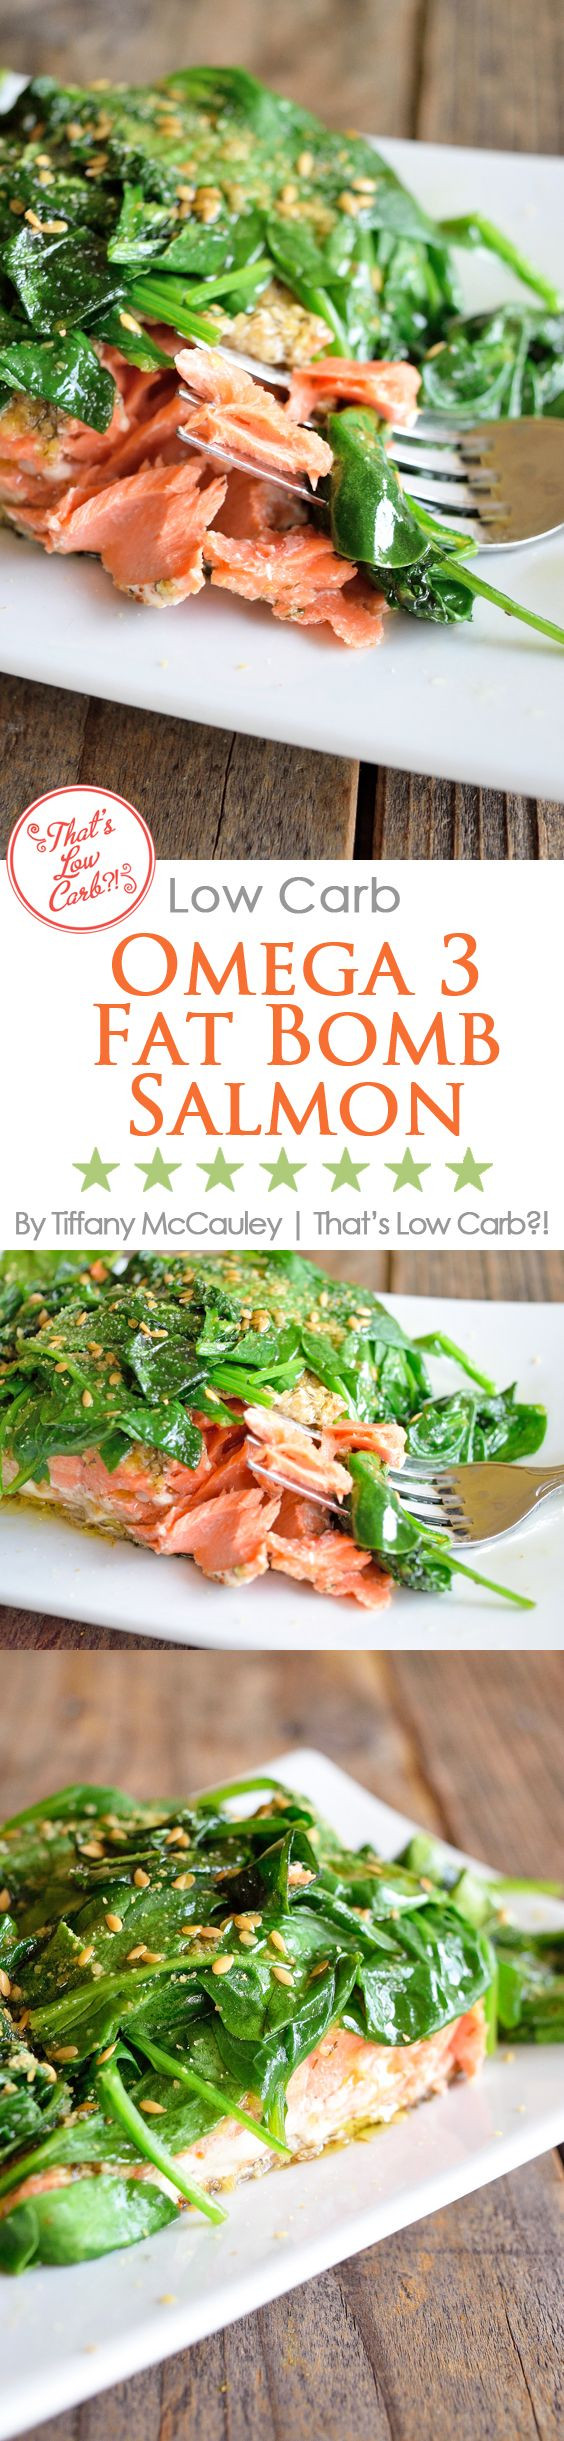 Low Fat Salmon Recipes
 Low Carb Recipes Omega 3 Fat Bomb Salmon Recipe